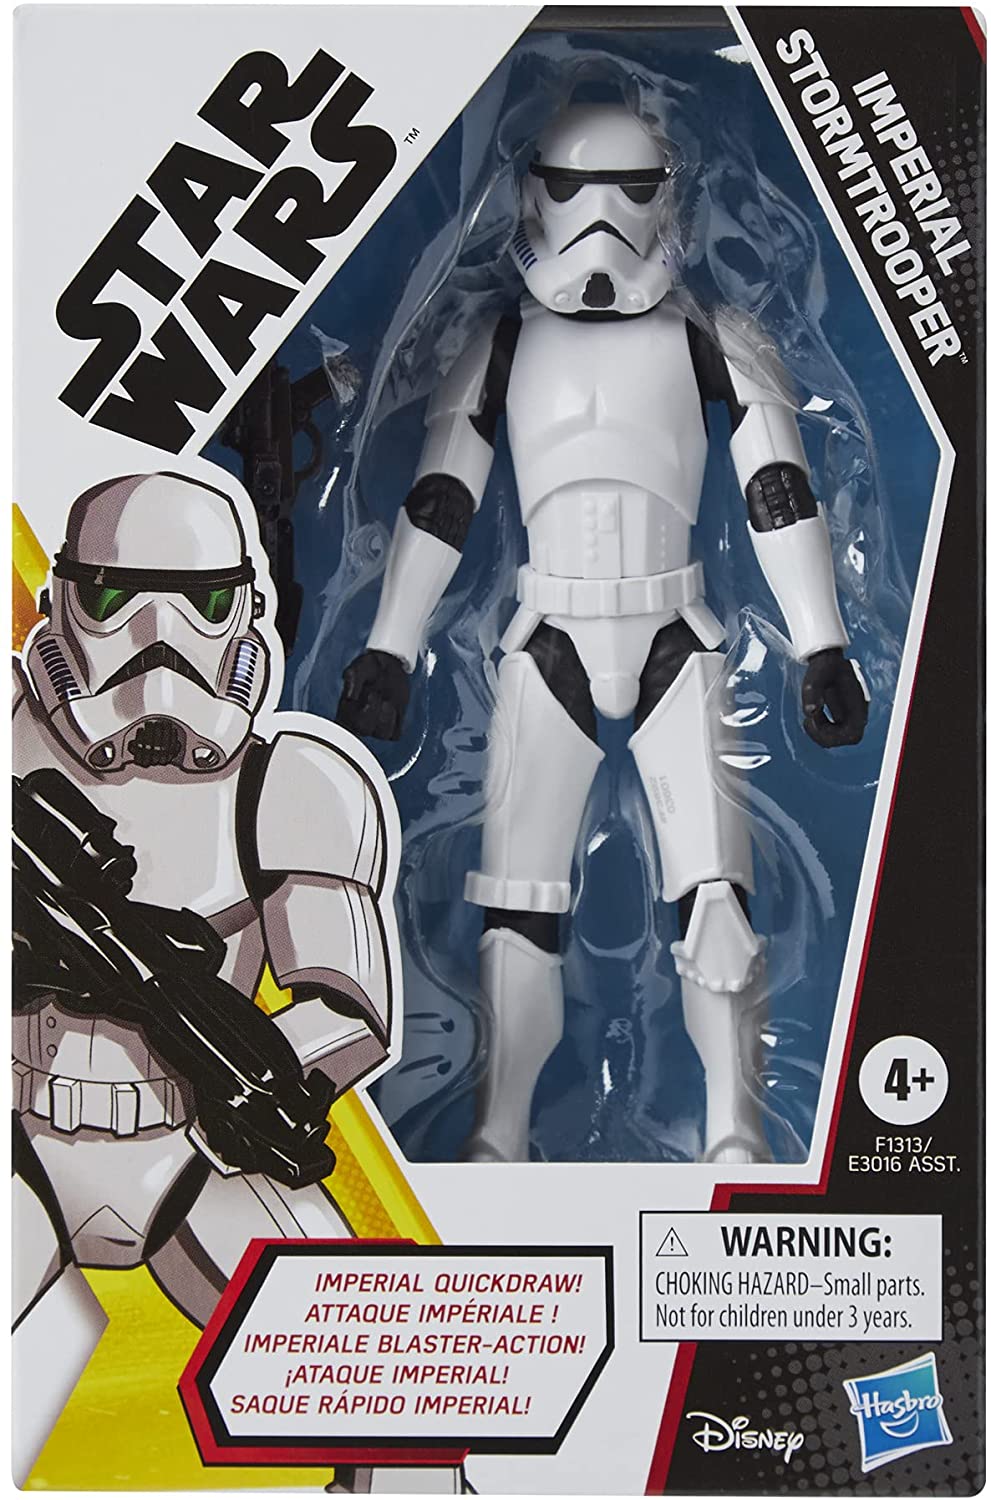 TM SWGOA Mando (Din Djarin) and Imperial Stormtrooper Figure 2-Pack 3